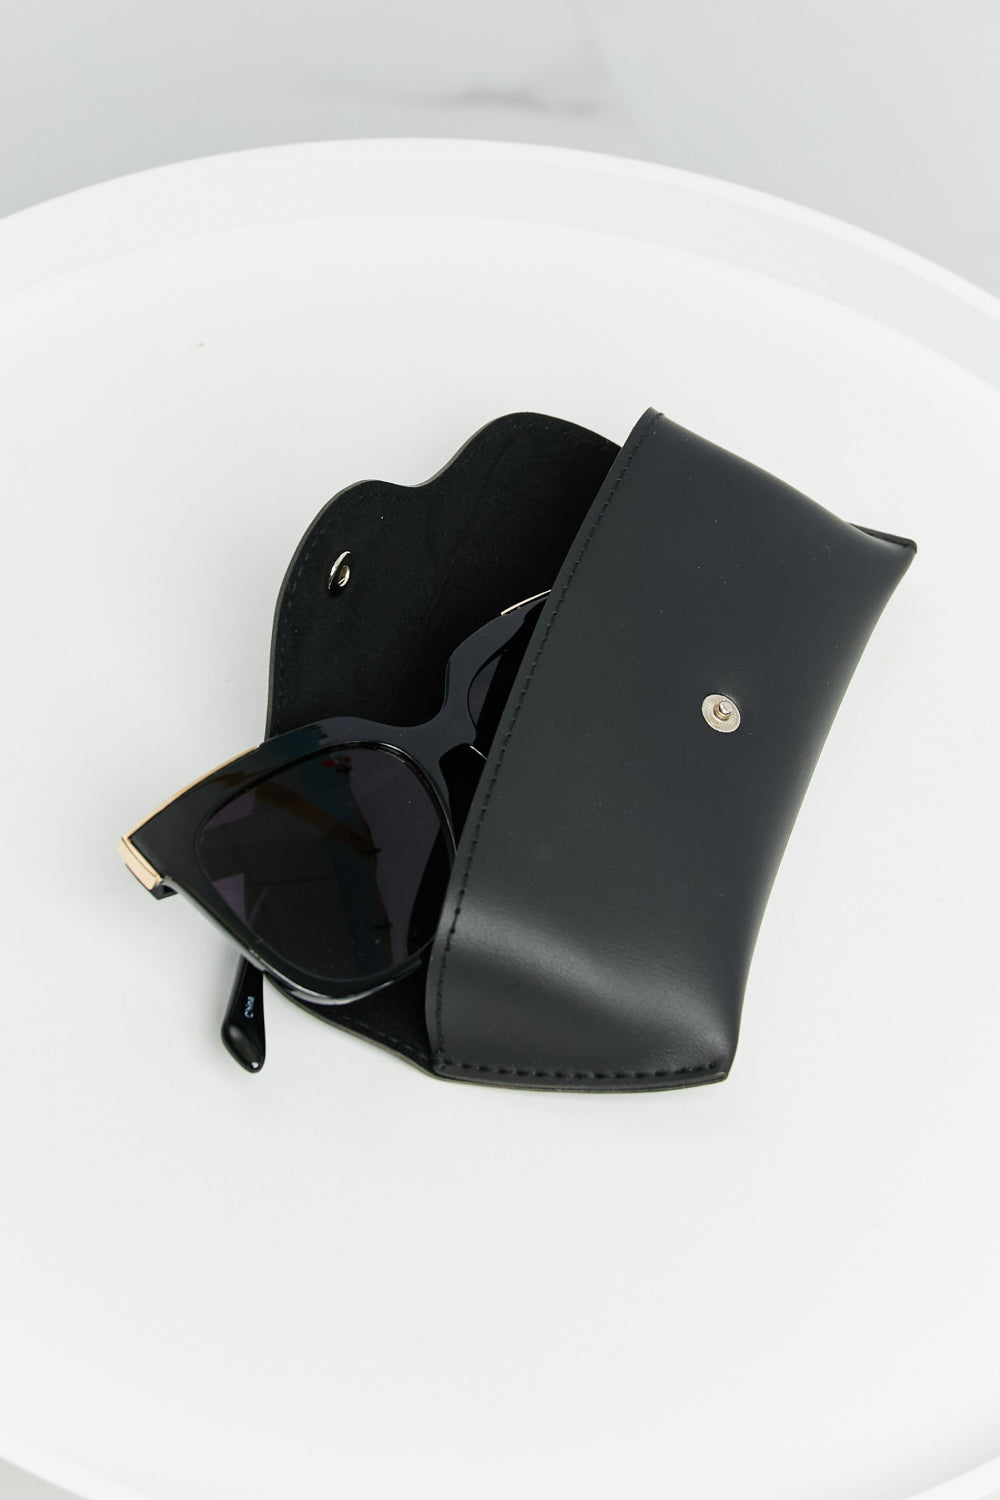 Tortoiseshell Full Rim Square Sunglasses Print on any thing USA/STOD clothes